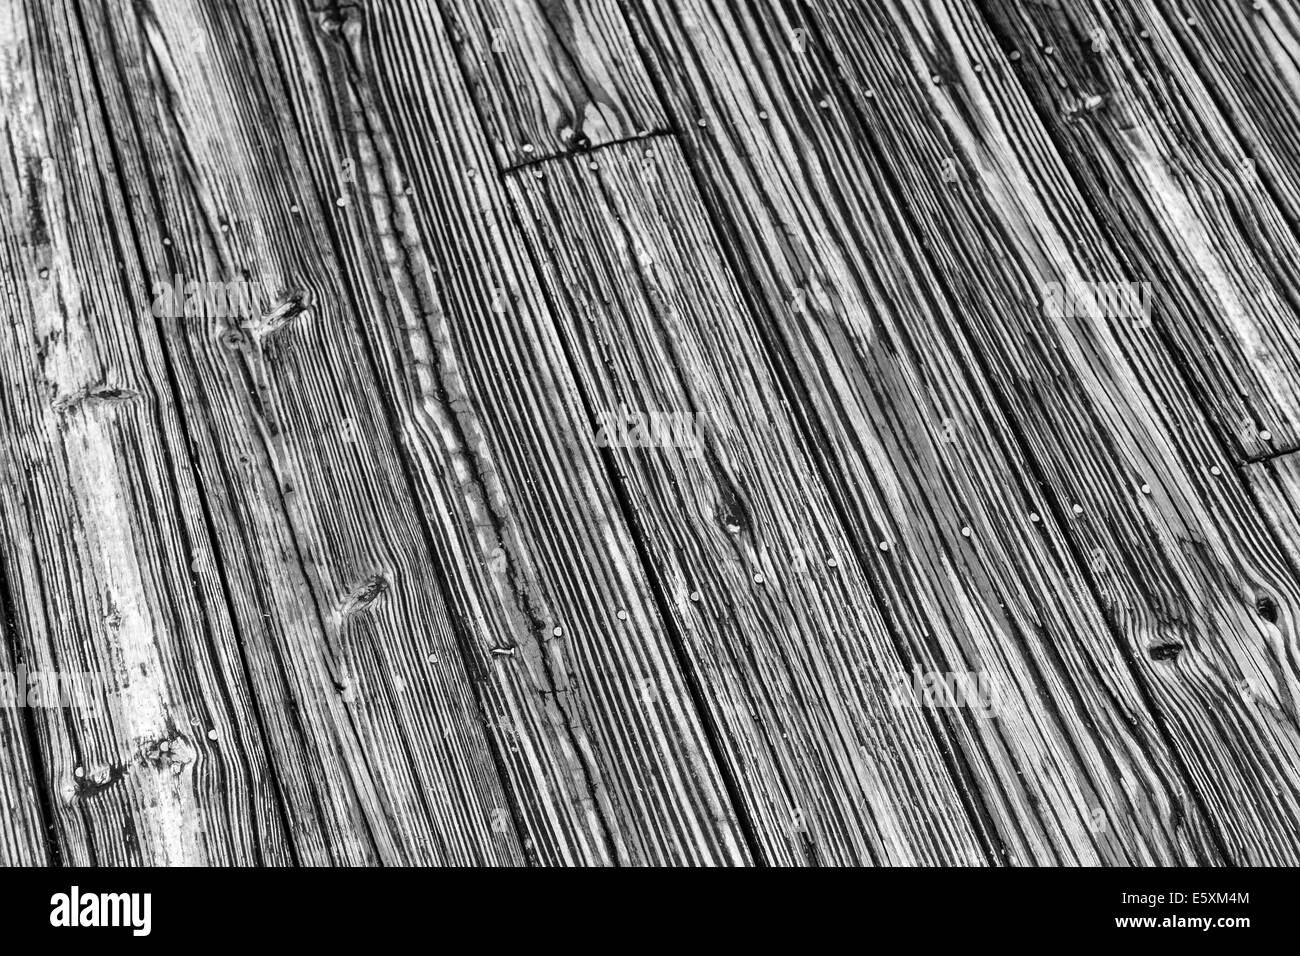 Black and White wood grain Stock Photo